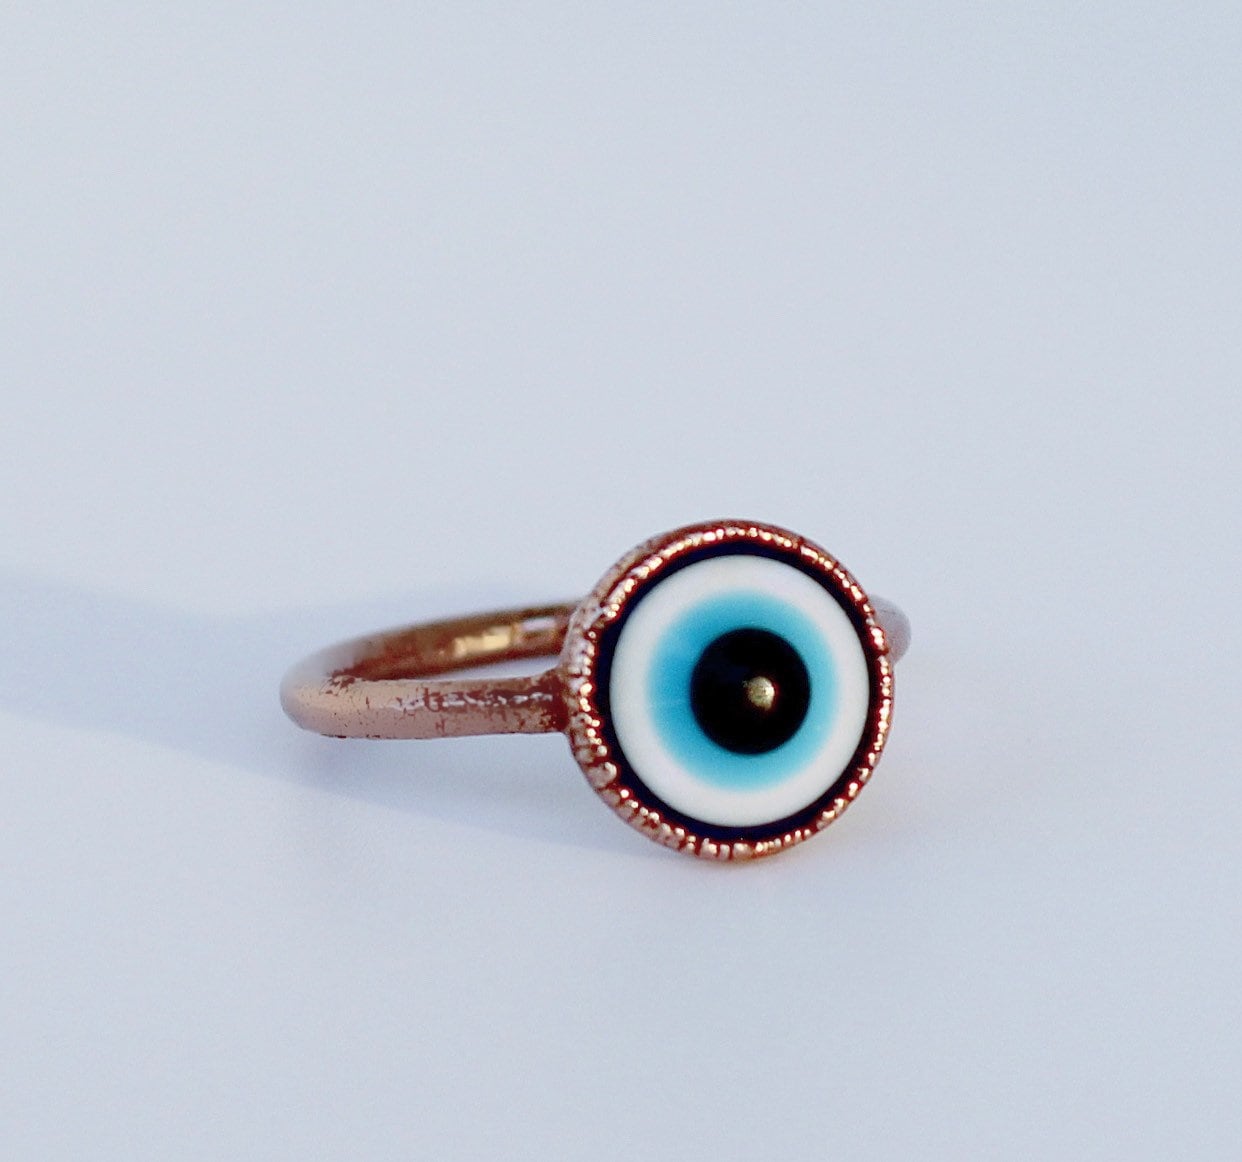 Evil Eye Ring, Evil Eye Jewelry, Big Eye Ring, Turkish Eye Ring, Protection Eye Ring, Third Eye Ring